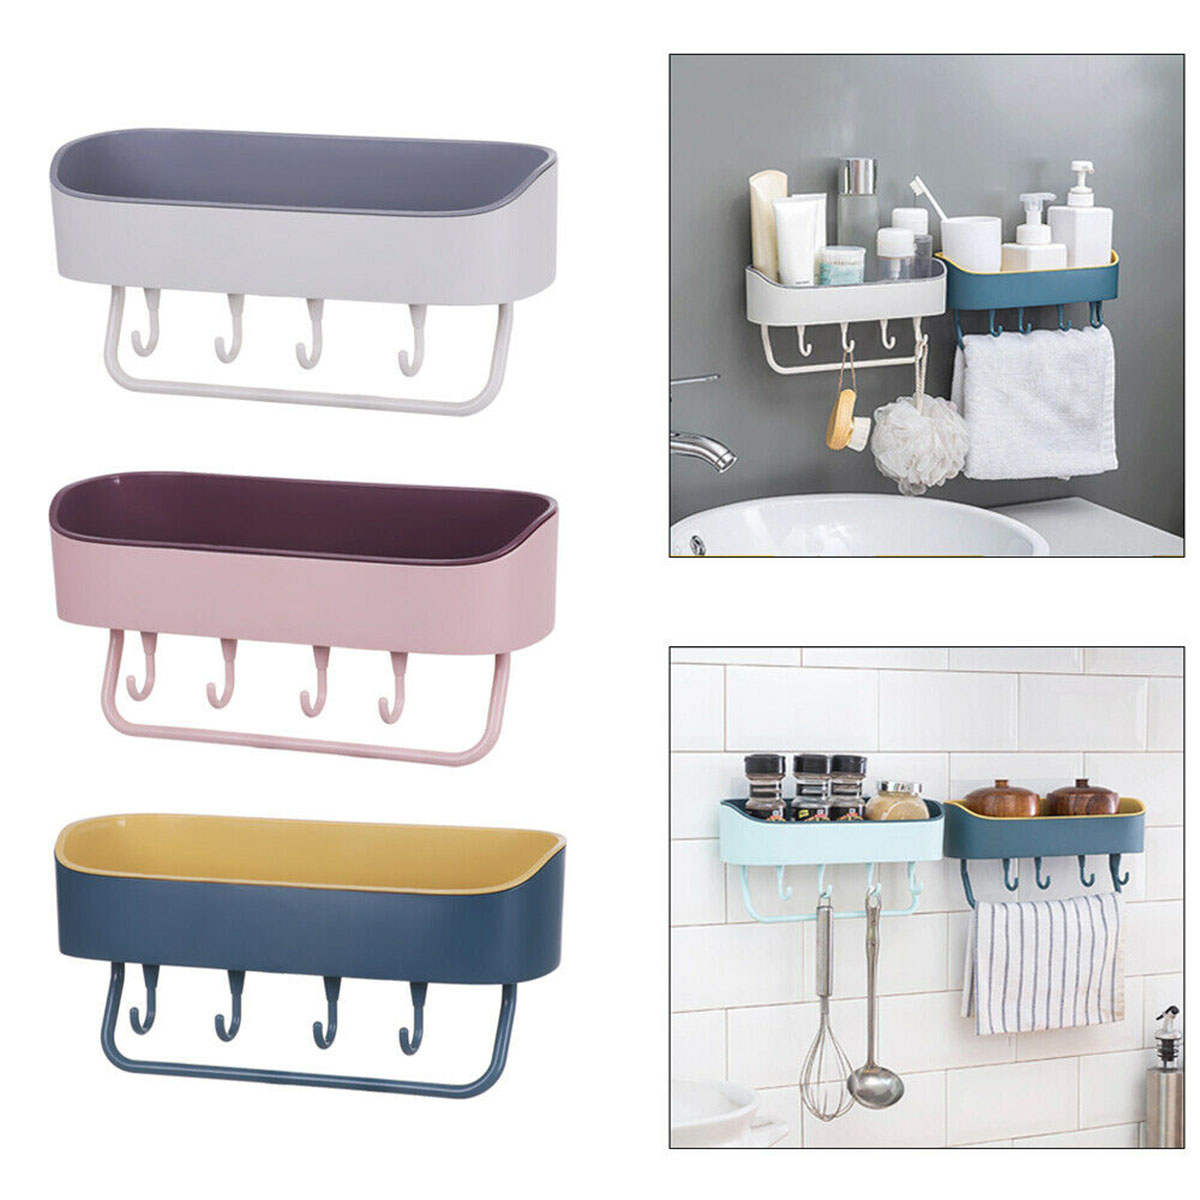 Self-adhesive-Wall-Hanging-Storage-Rack-Shelf-Hook-Home-Kitchen-Holder-Organizer-Towel-Holder-1552900-1